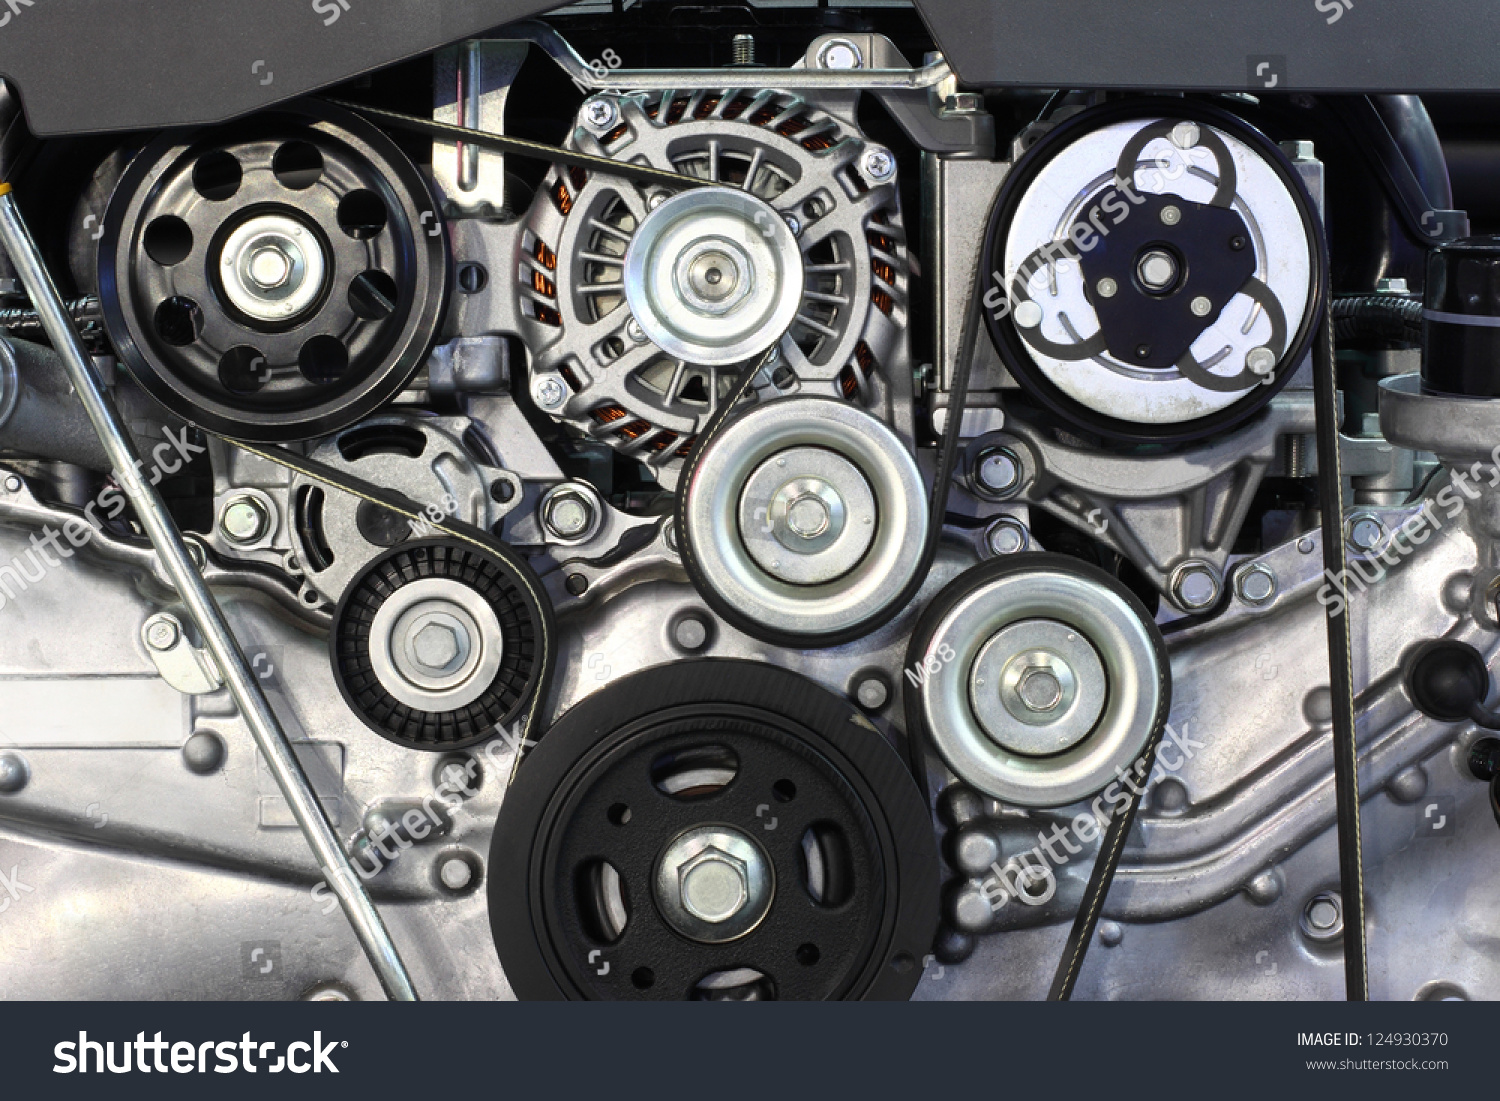 Car Engine Stock Photo 124930370 : Shutterstock